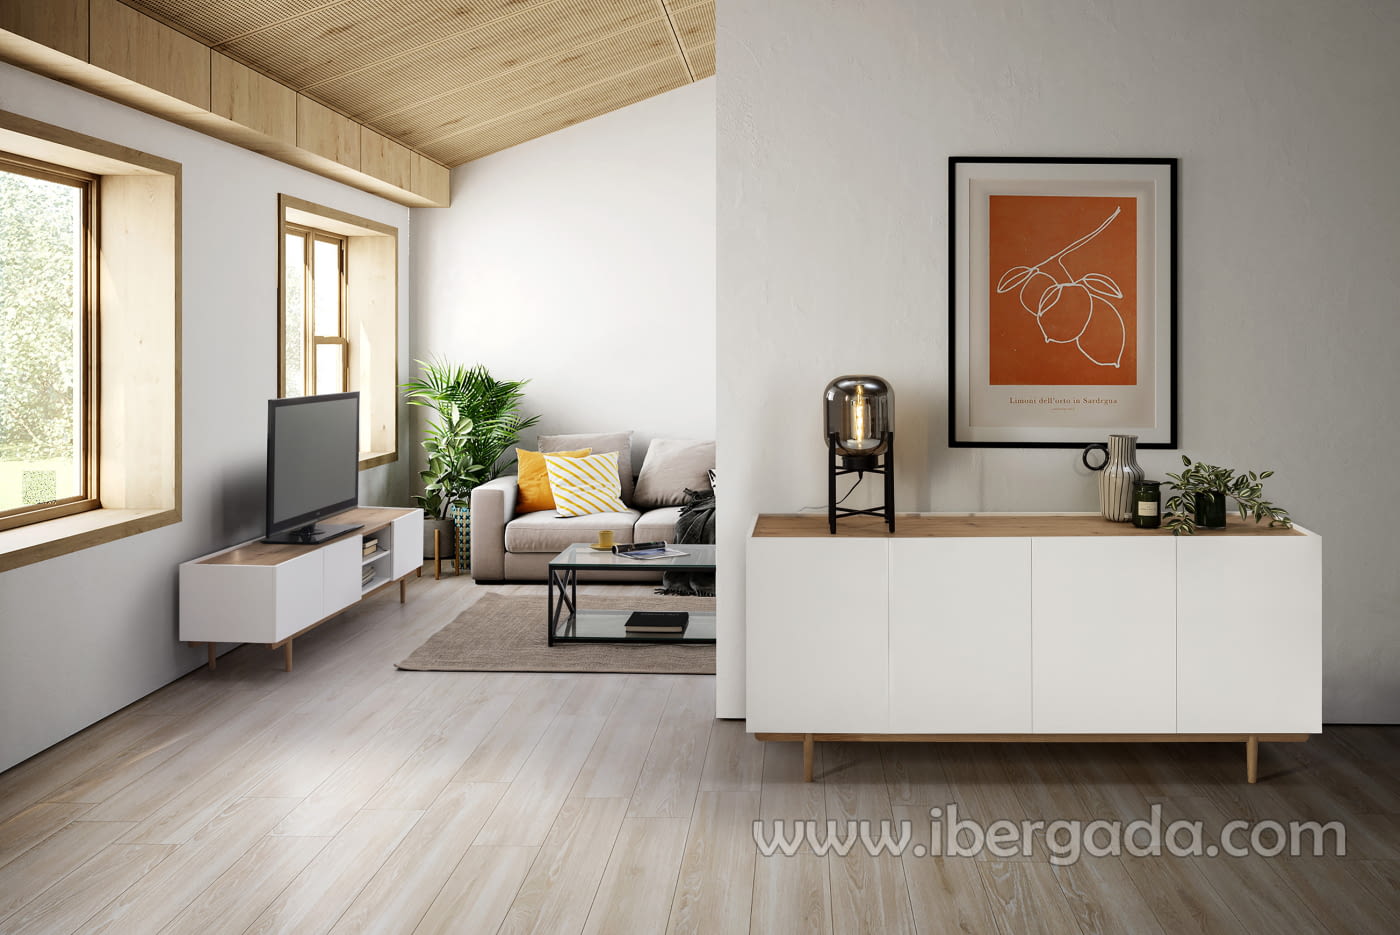 Muebles salon moderno Argos blanco mate y naturale (mesa  tv+aparador+estanteria)